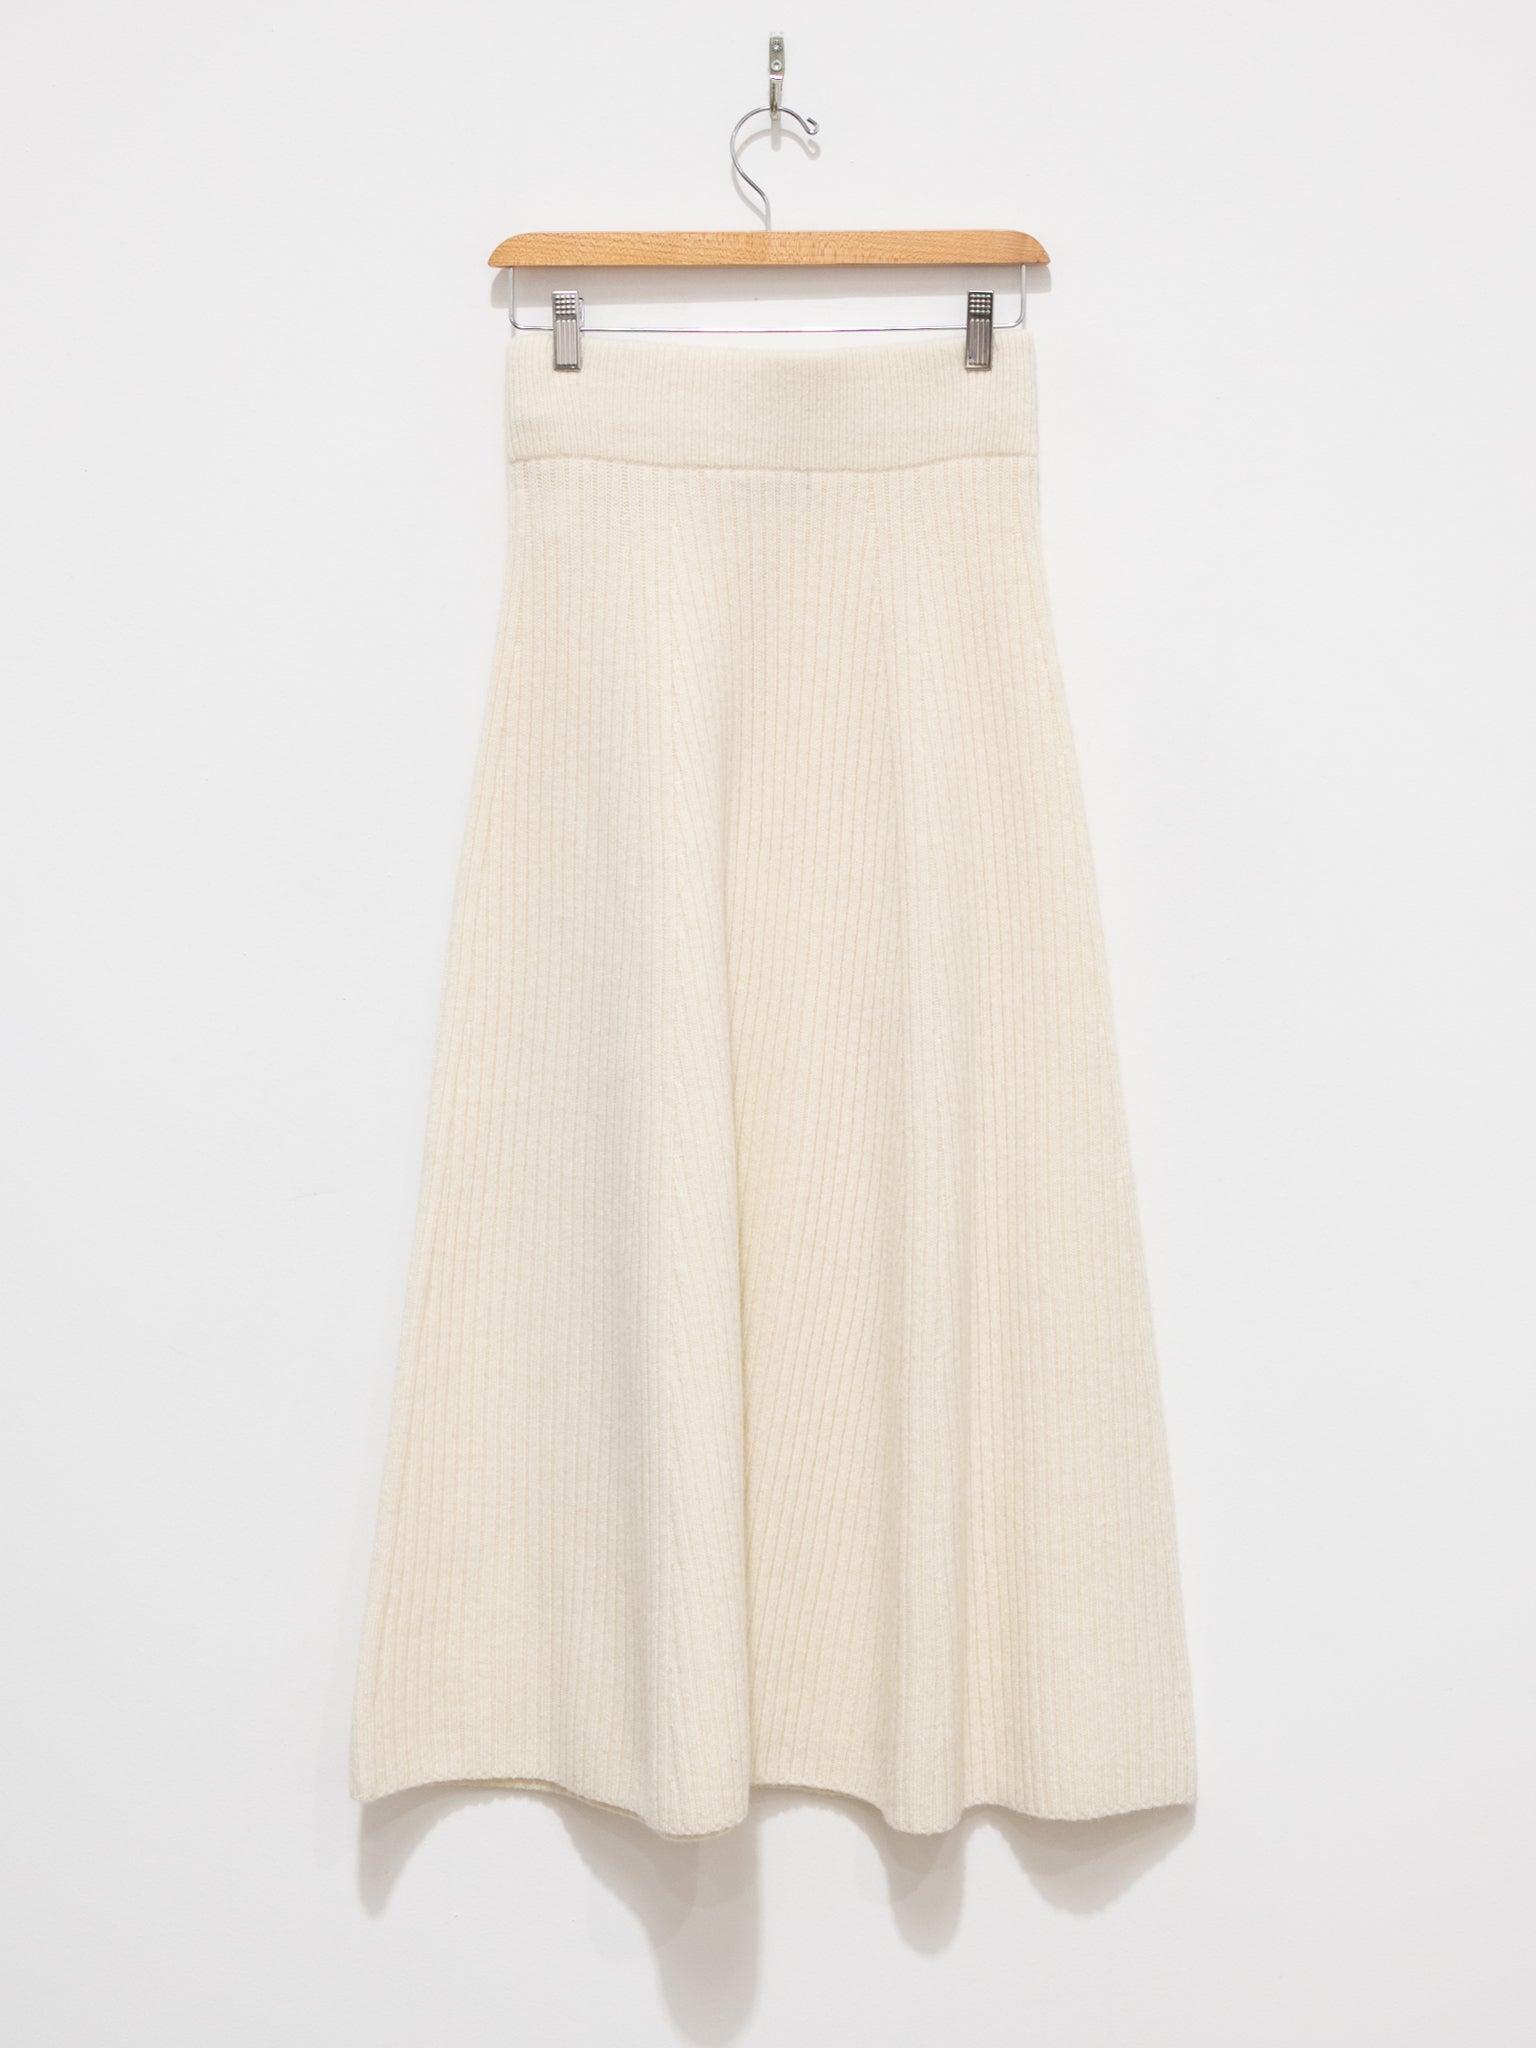 Namu Shop - Ichi Antiquites Ribbed Knit Skirt - White